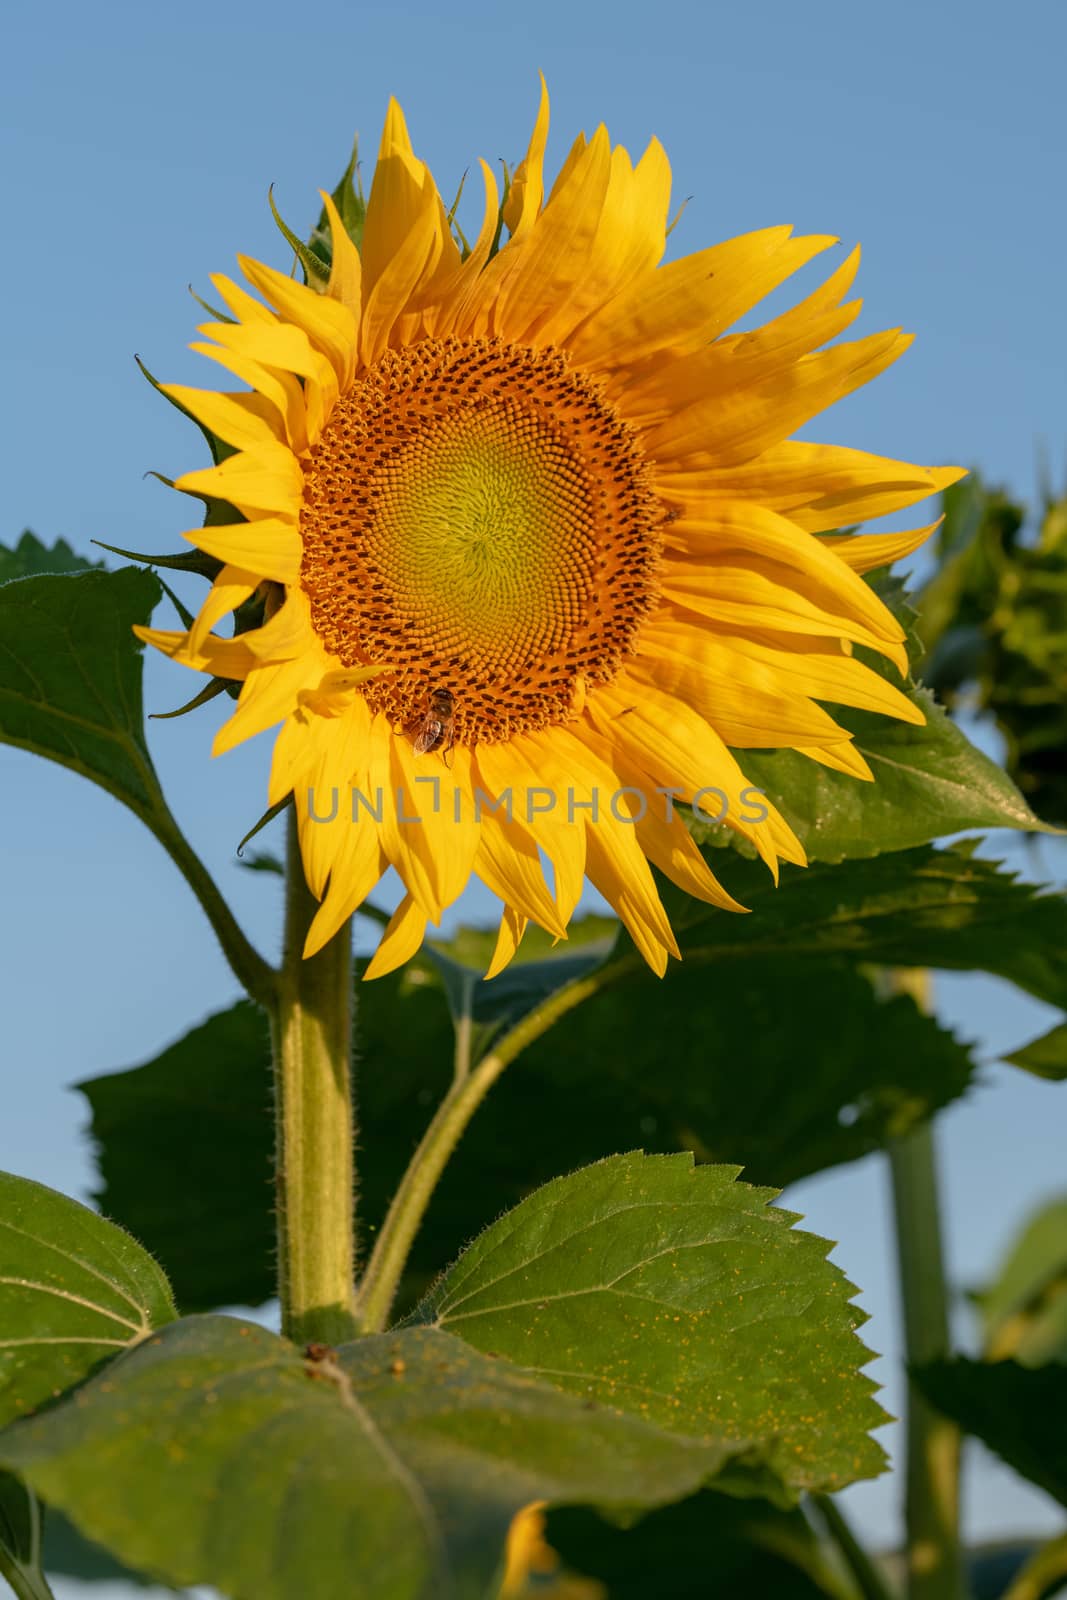 Sunflower field in morning sunlight, close up